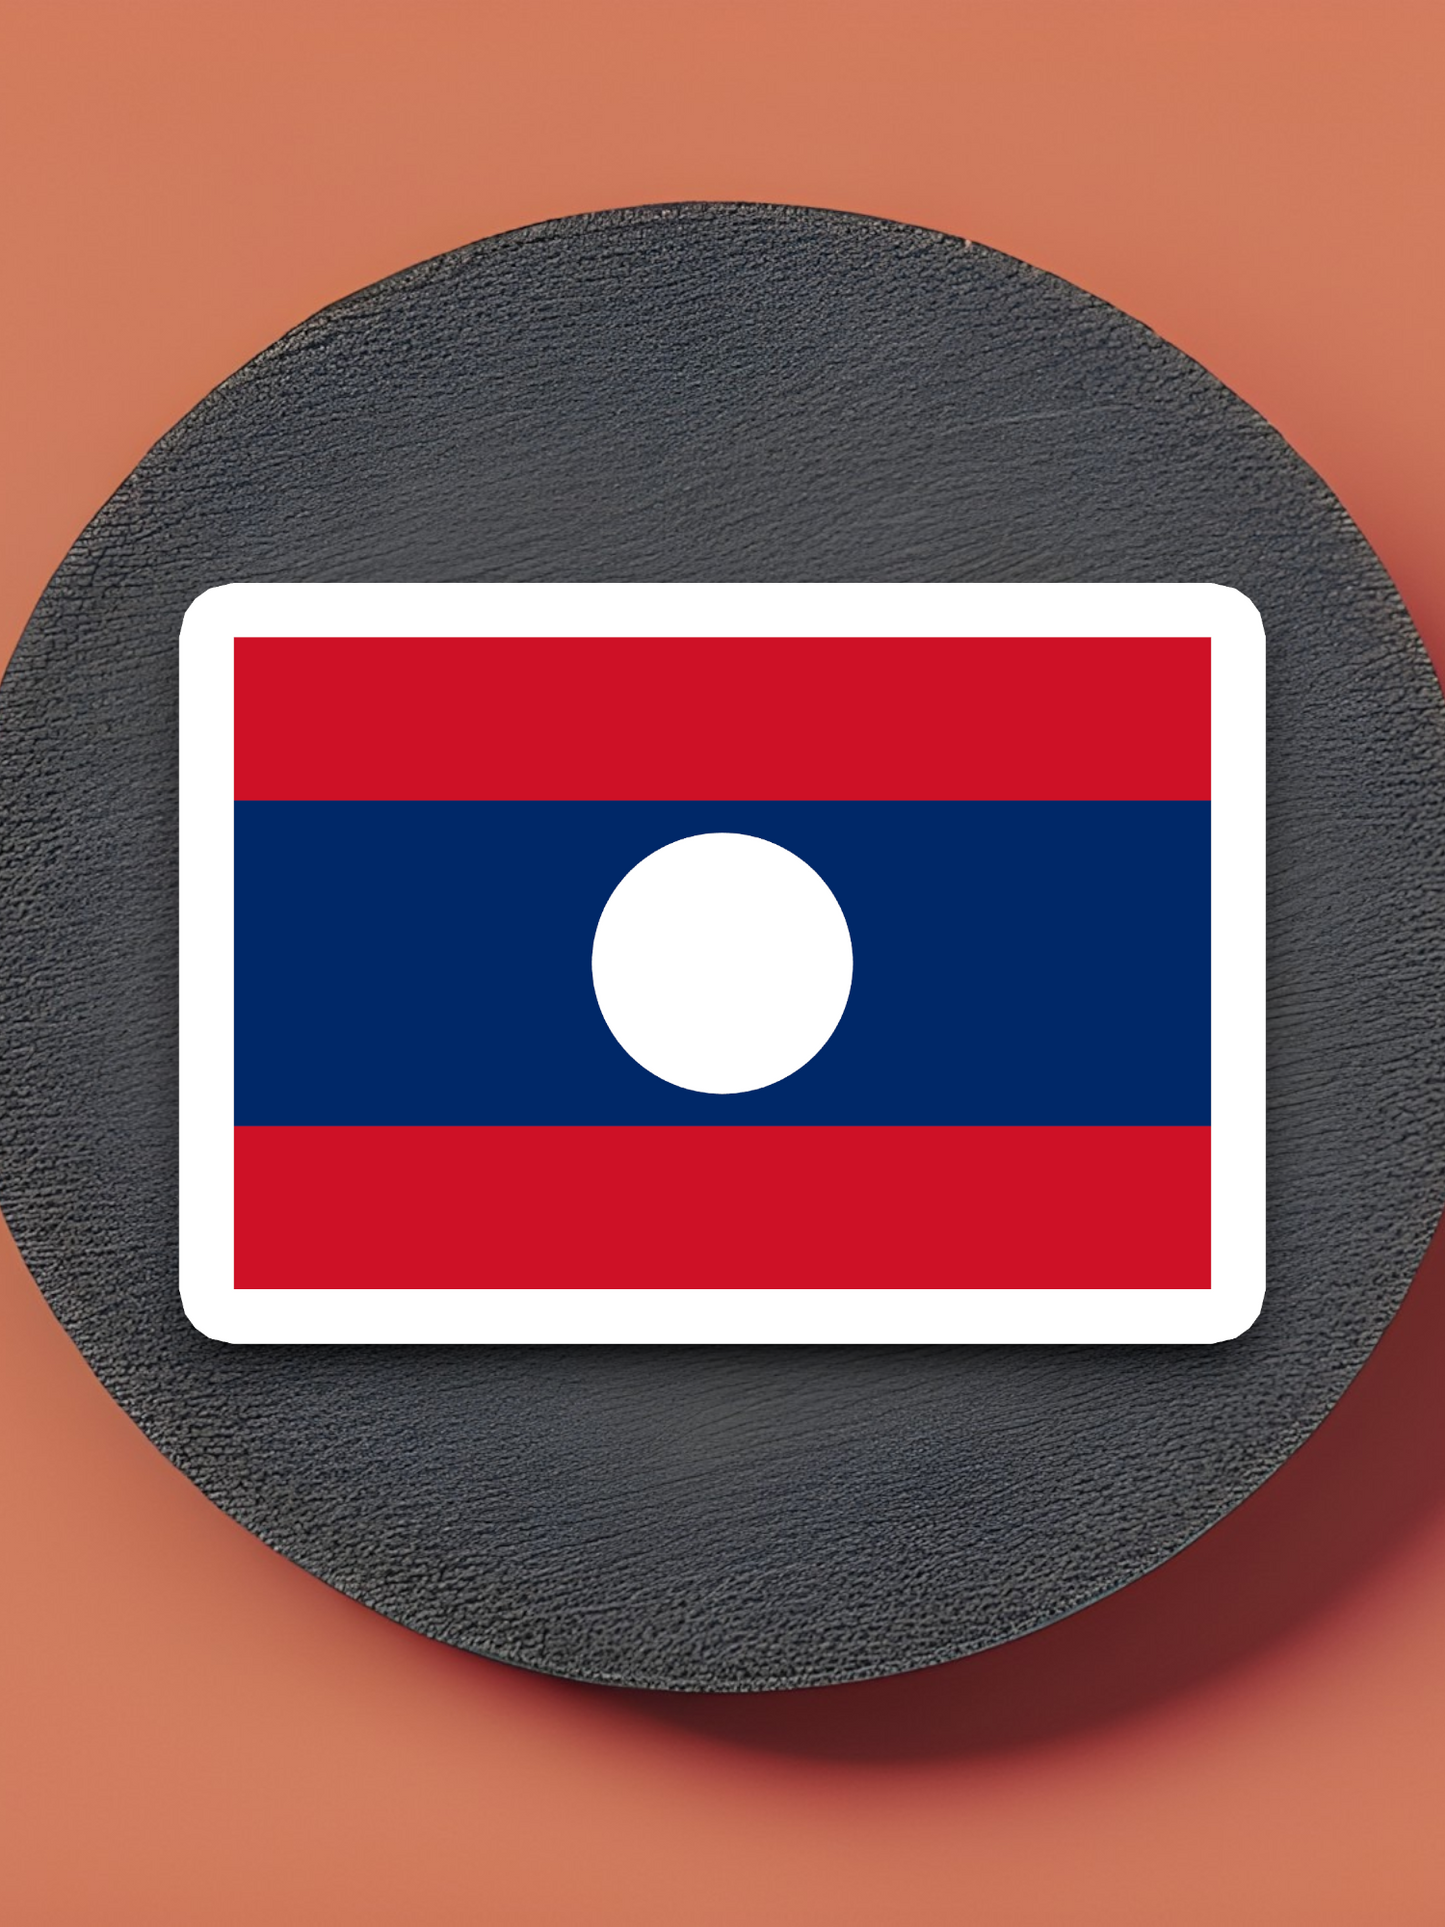 Laos Flag - International Country Flag Sticker